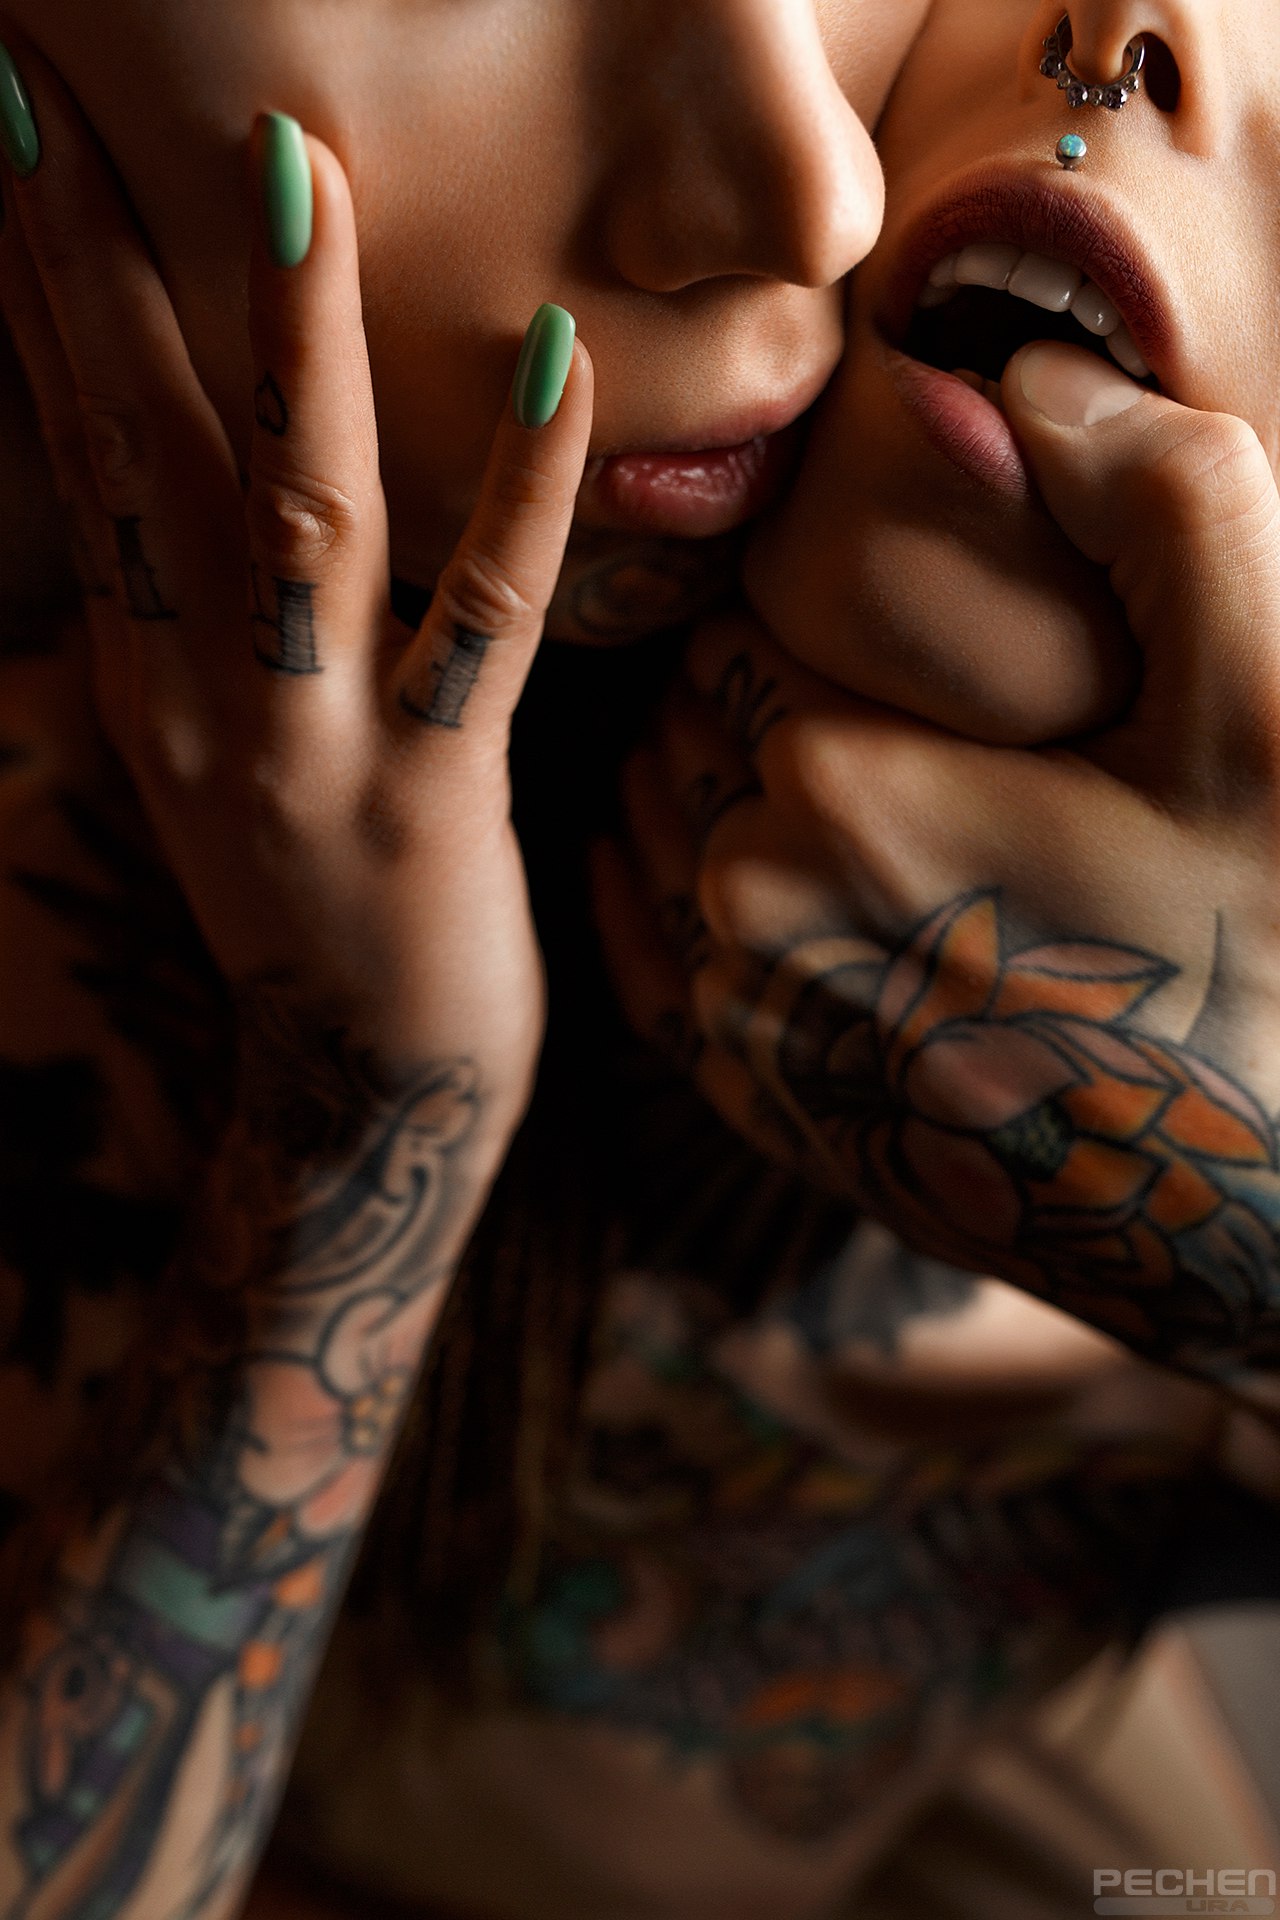 Ura Pechen Women Face Tattoo Painted Nails 1280x1920